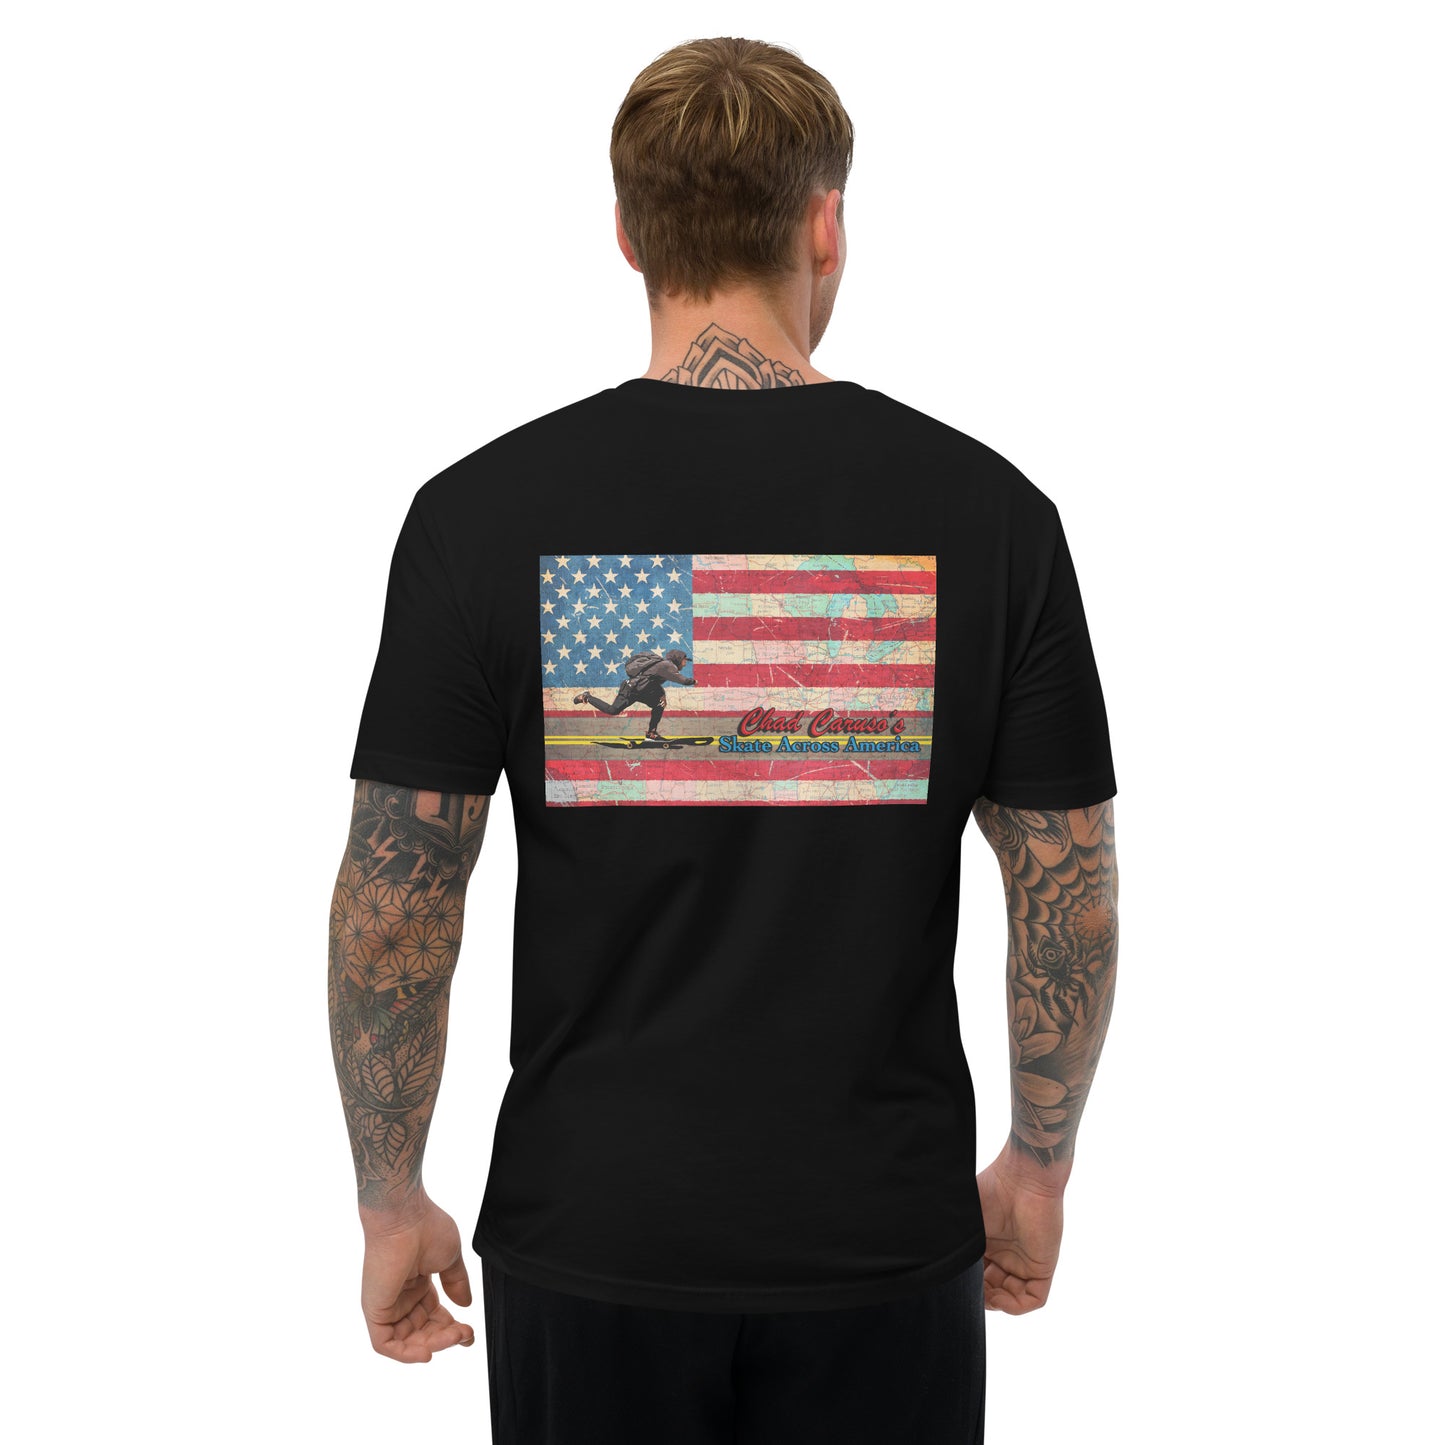 Chad Caruso's Skate Across America Short Sleeve T-shirt